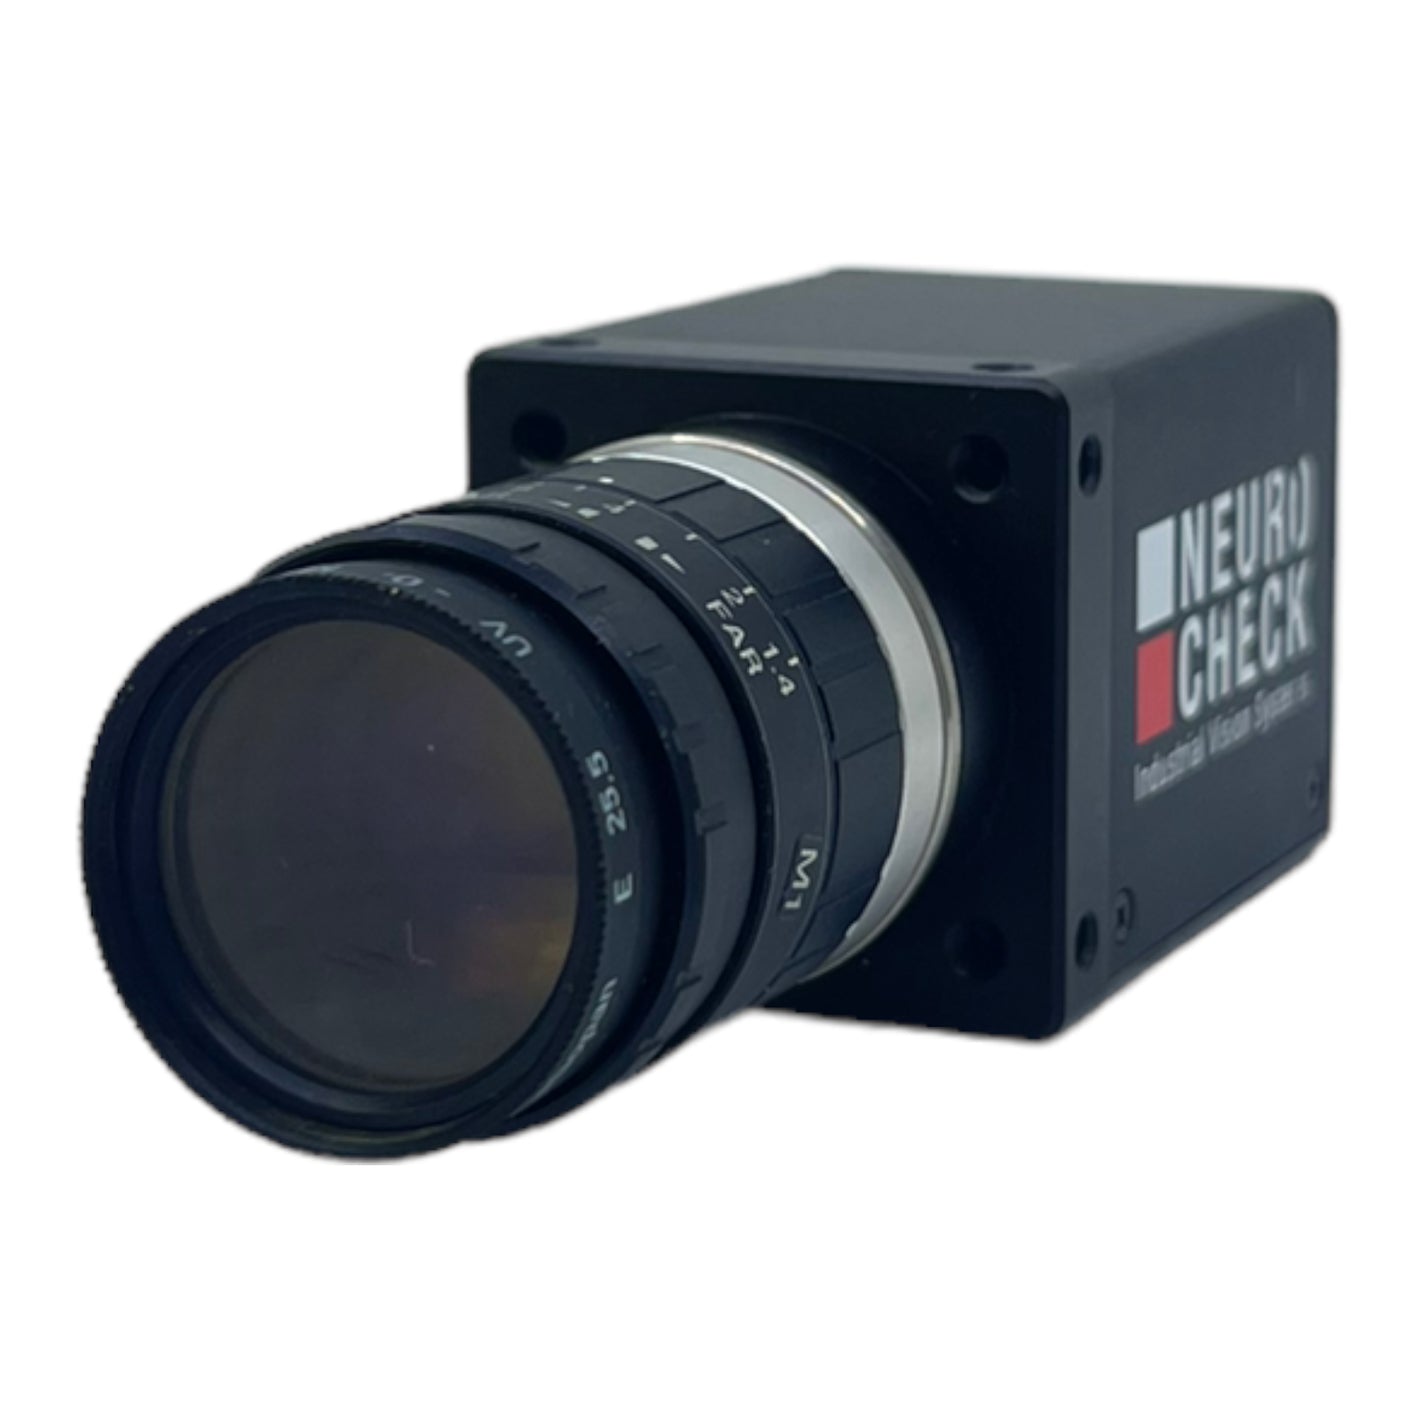 Baumer NCF108 11037038 industrial camera with Fujinon HF25HA-1B camera 